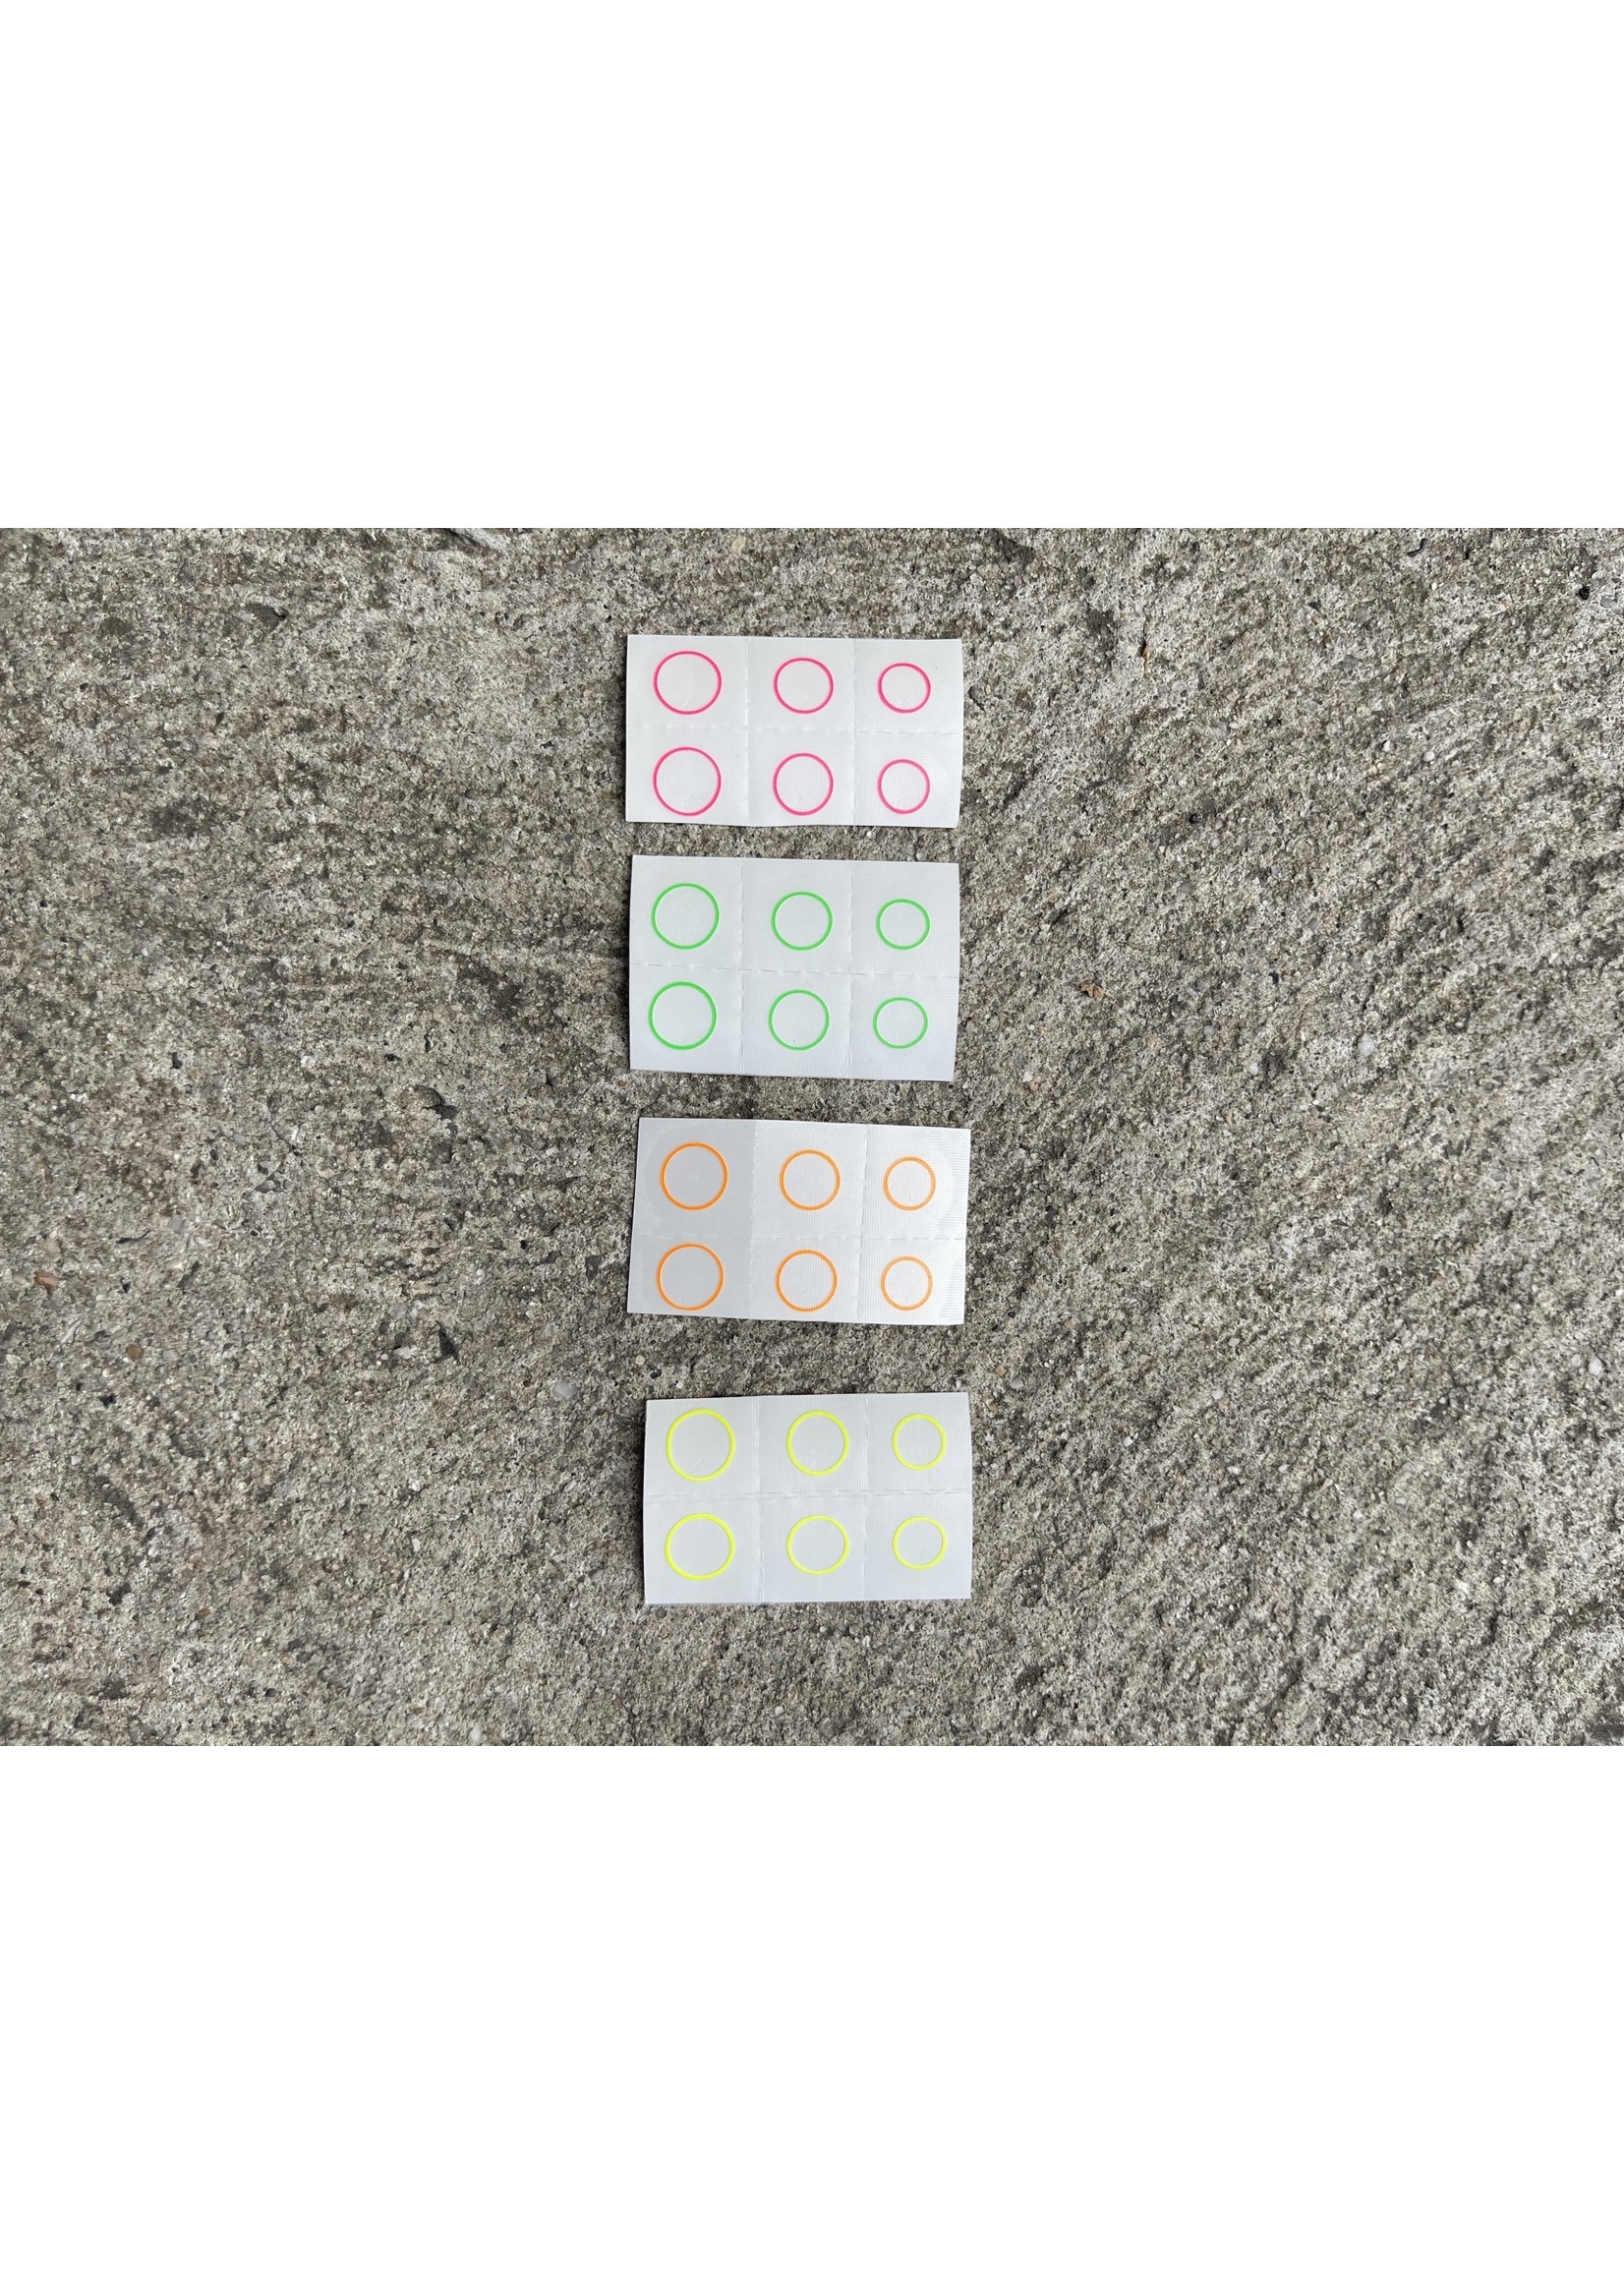 Spitfire Scope Reticles (Stickers) - per sheet